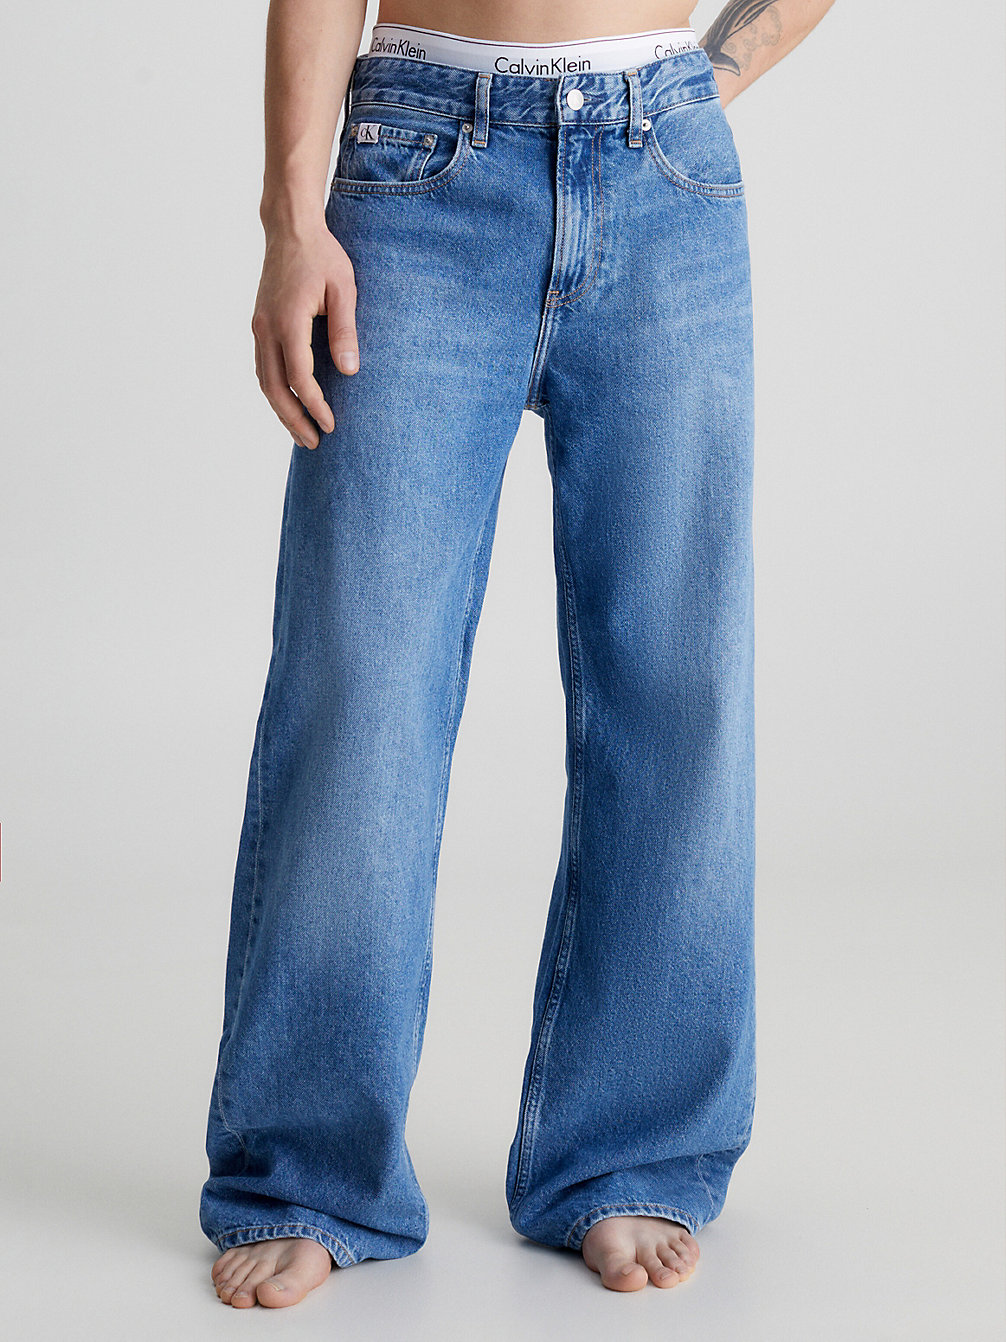 DENIM MEDIUM > 90's Loose Jeans > undefined men - Calvin Klein